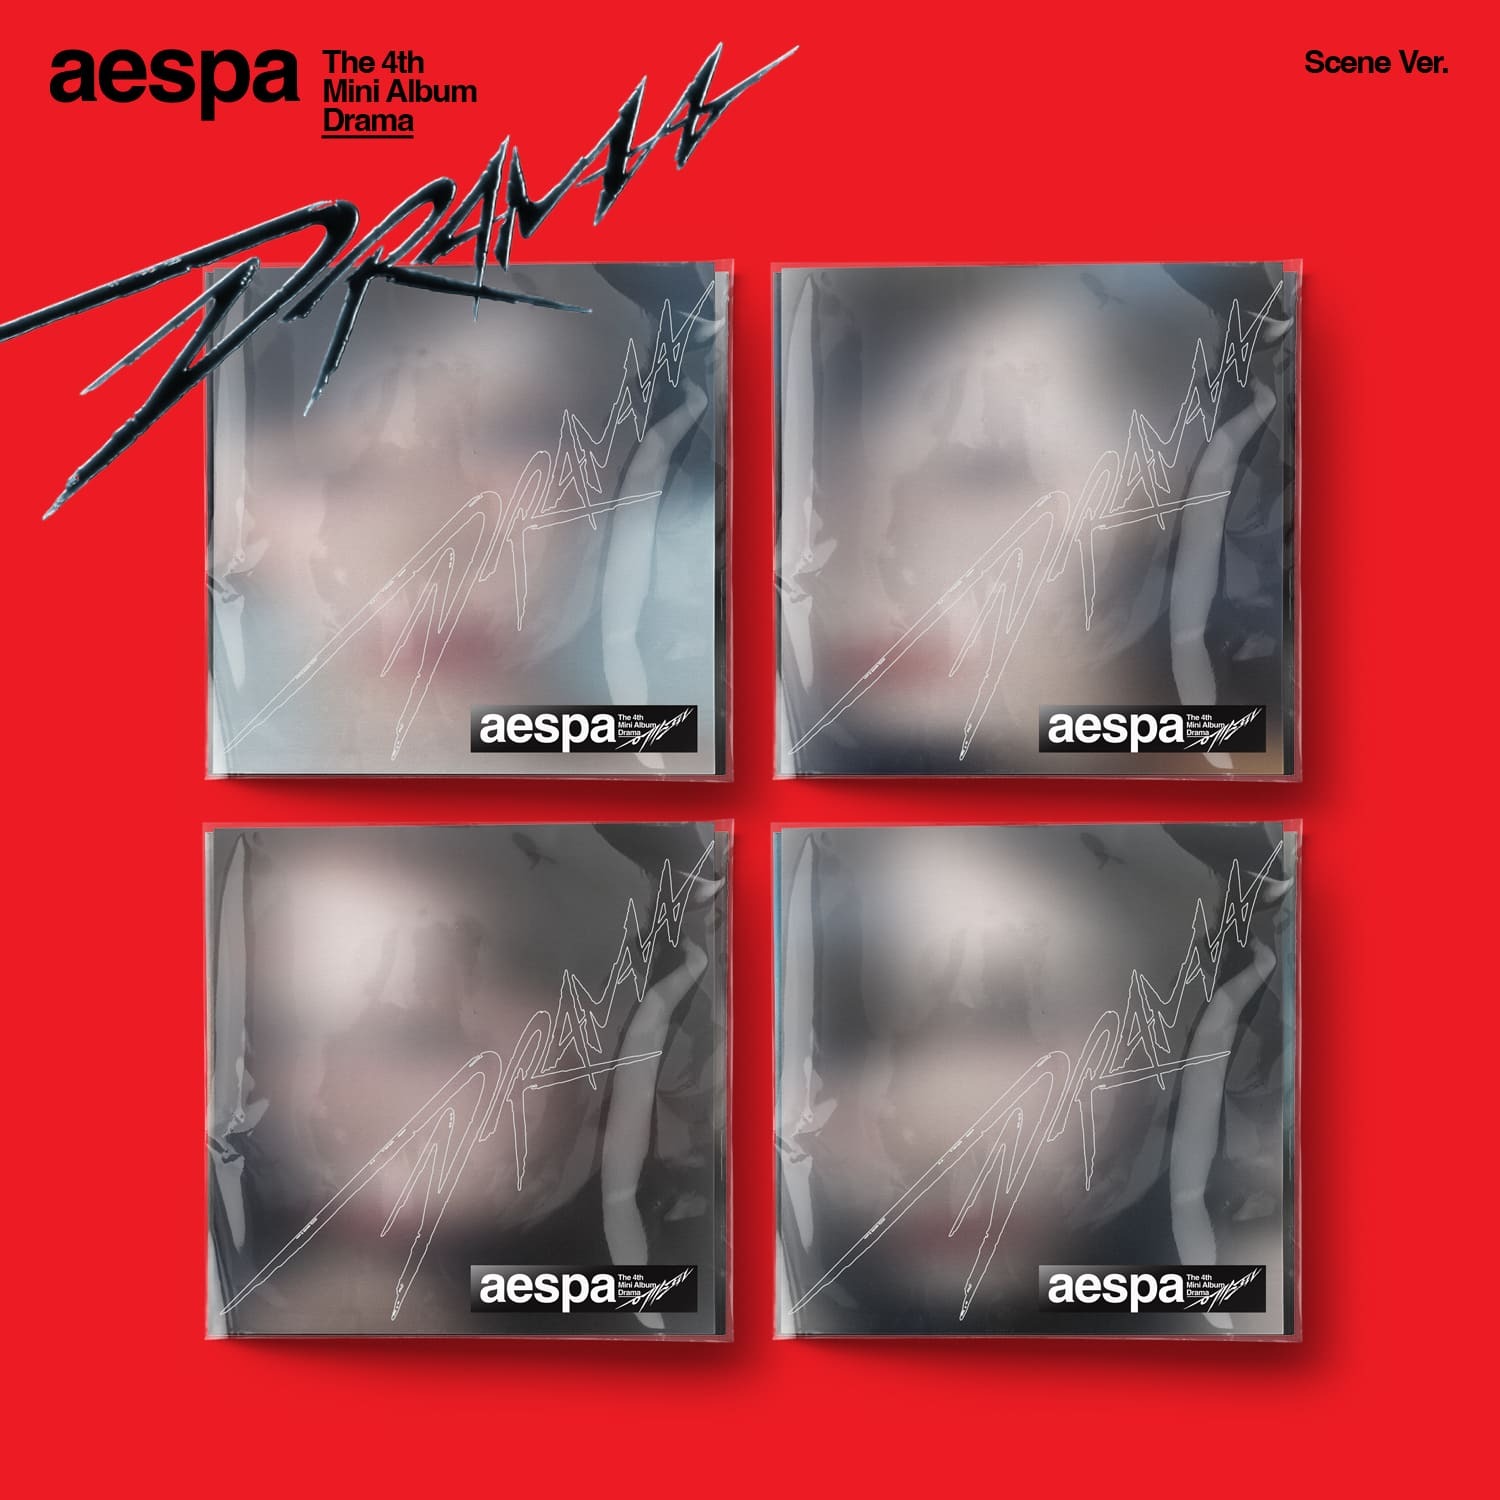 Aespa - Drama (4th Mini Album) [Scene Ver.]